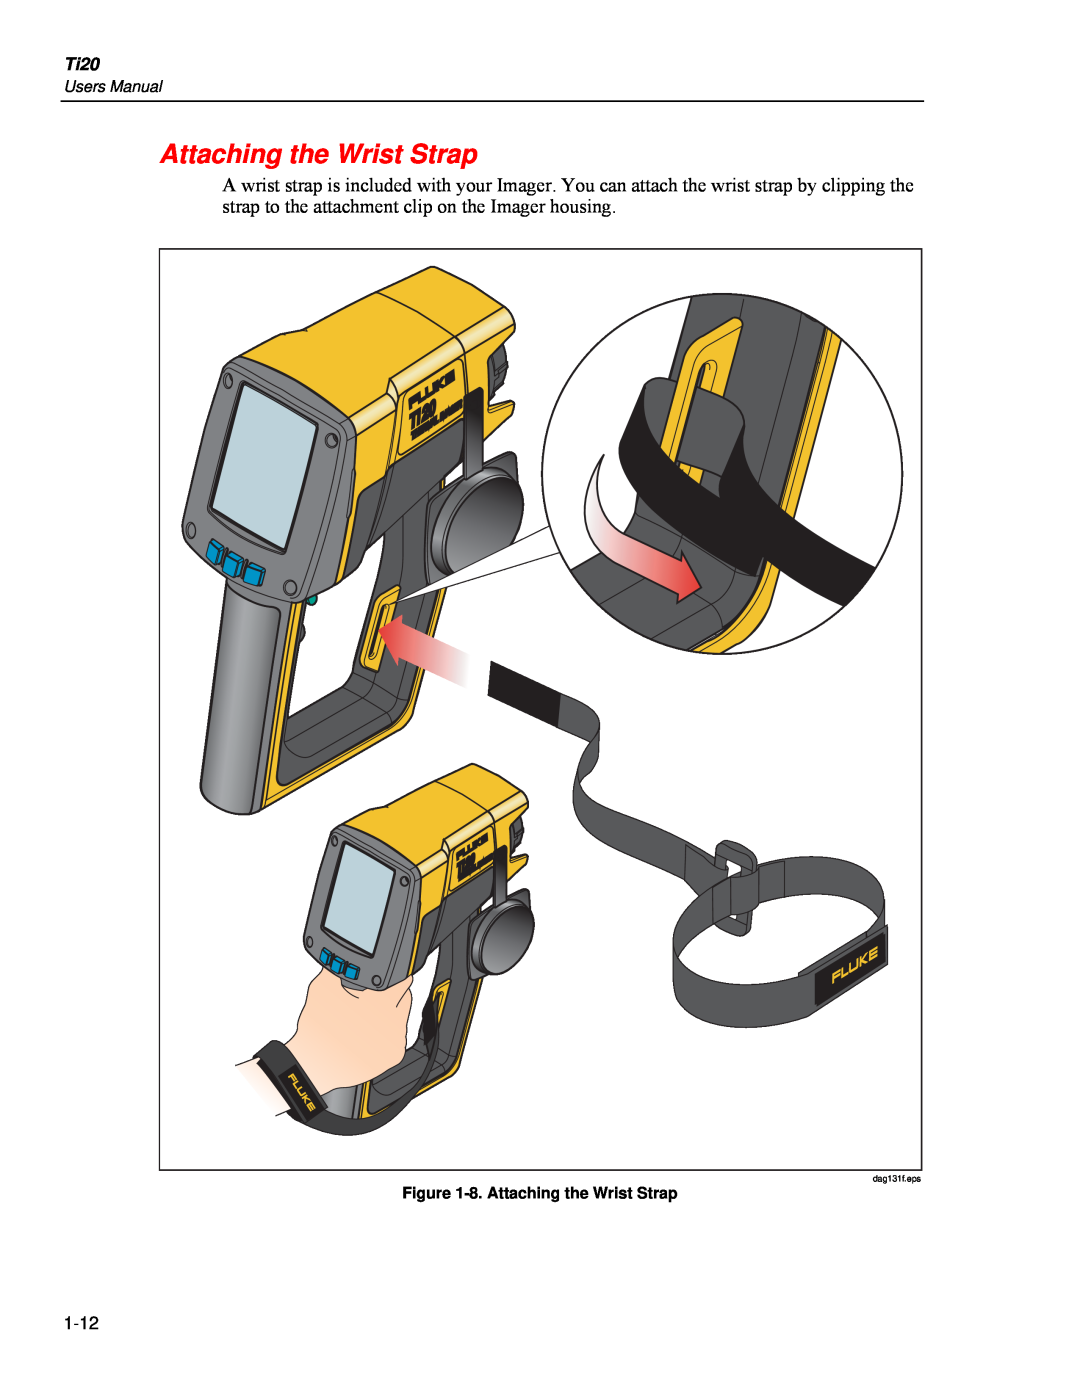 Fluke Ti20 user manual Attaching the Wrist Strap, 1-12, dag131f.eps, Image 